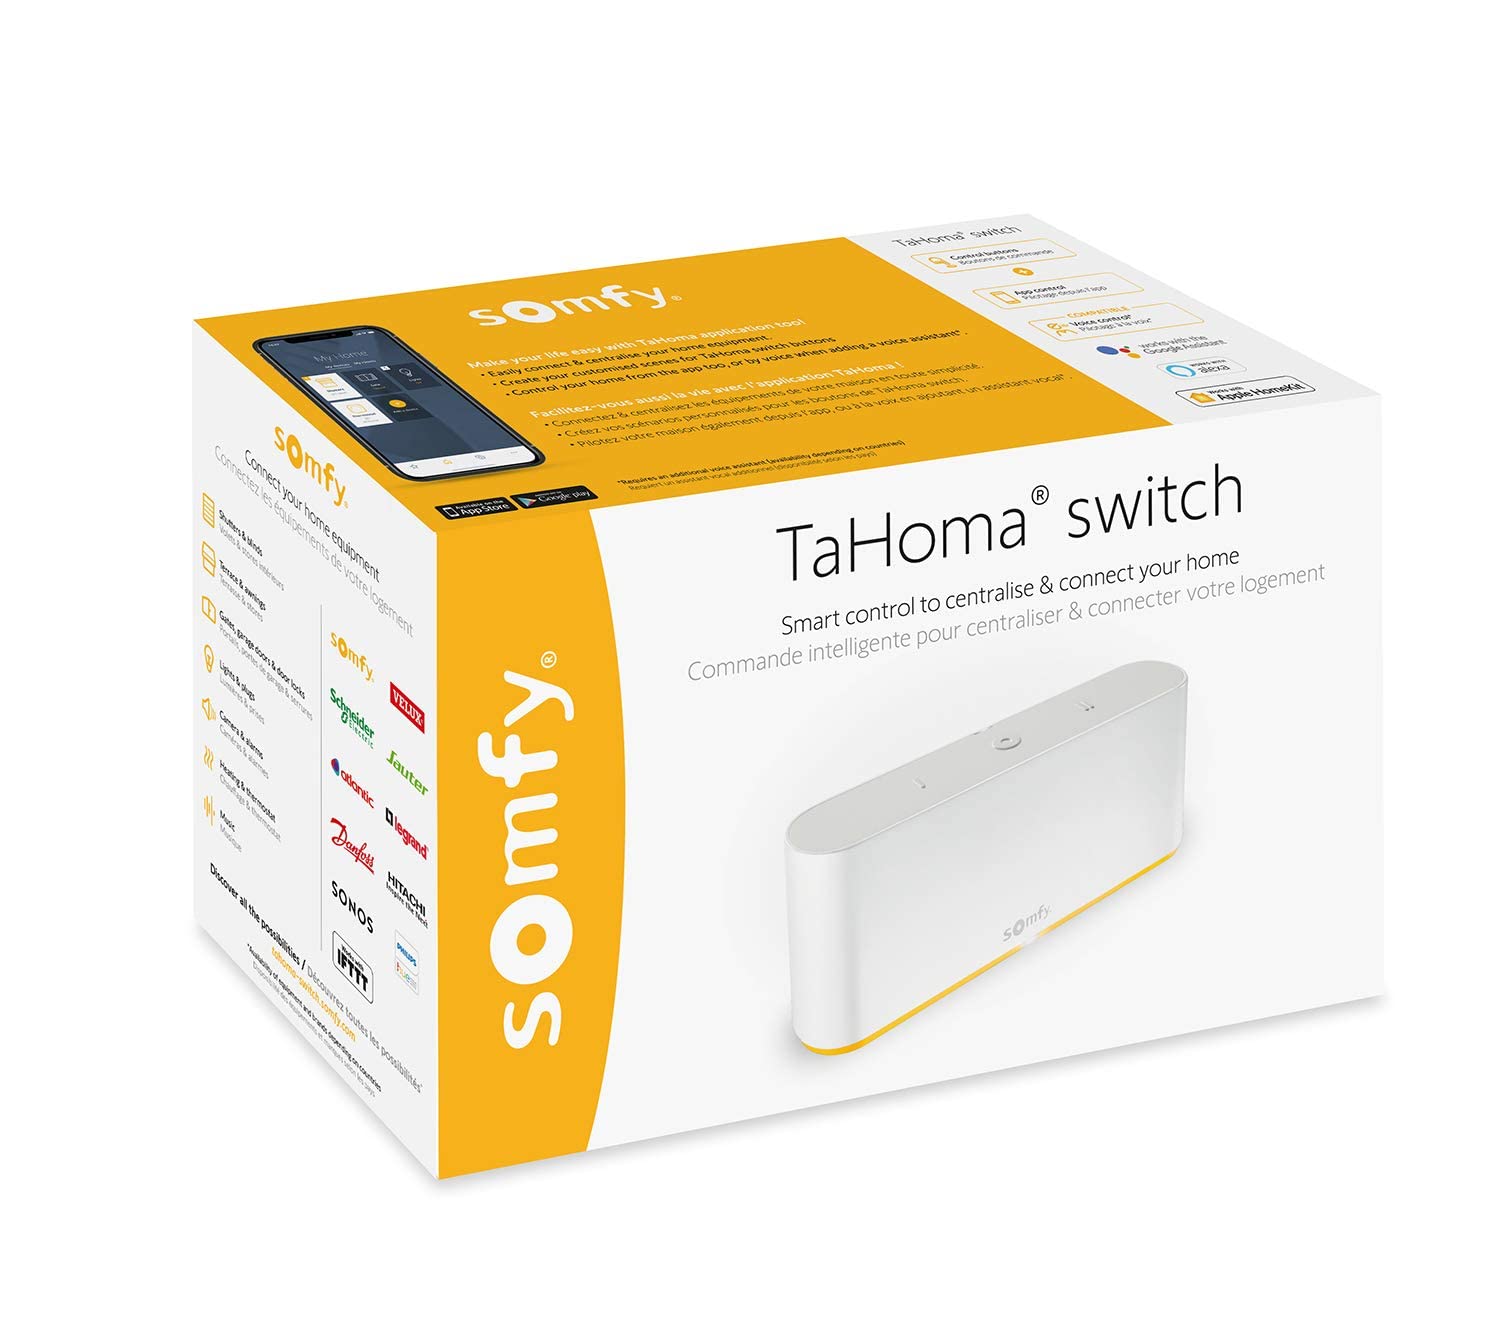 Somfy 1870595 - TaHoma Switch | intelligente Smart Home - Zentrale | Kompatibel mit io-, RTS- Technologien & Zigbee 3.0 | Sprachsteuerung mit Amazon Alexa, Appple HomeKit & Google Assistant